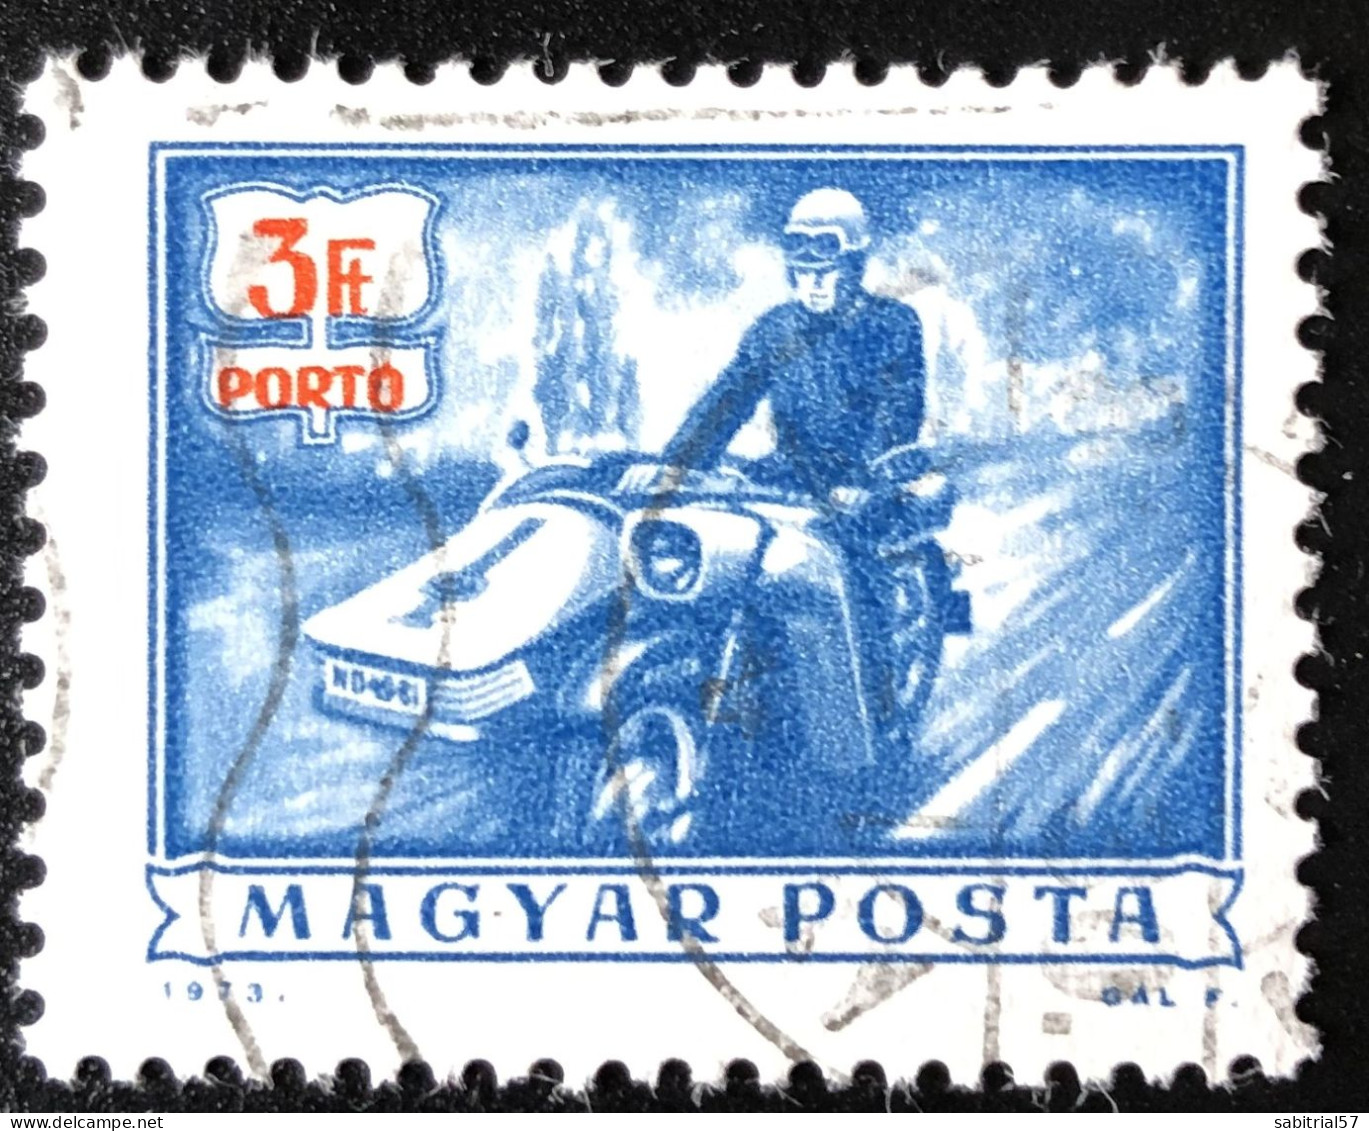 Hungria 1973 / Postman/ Sidecar / Hungary / Hongrie / Motorcycles / Motociclettes / Motorräder - Motorbikes